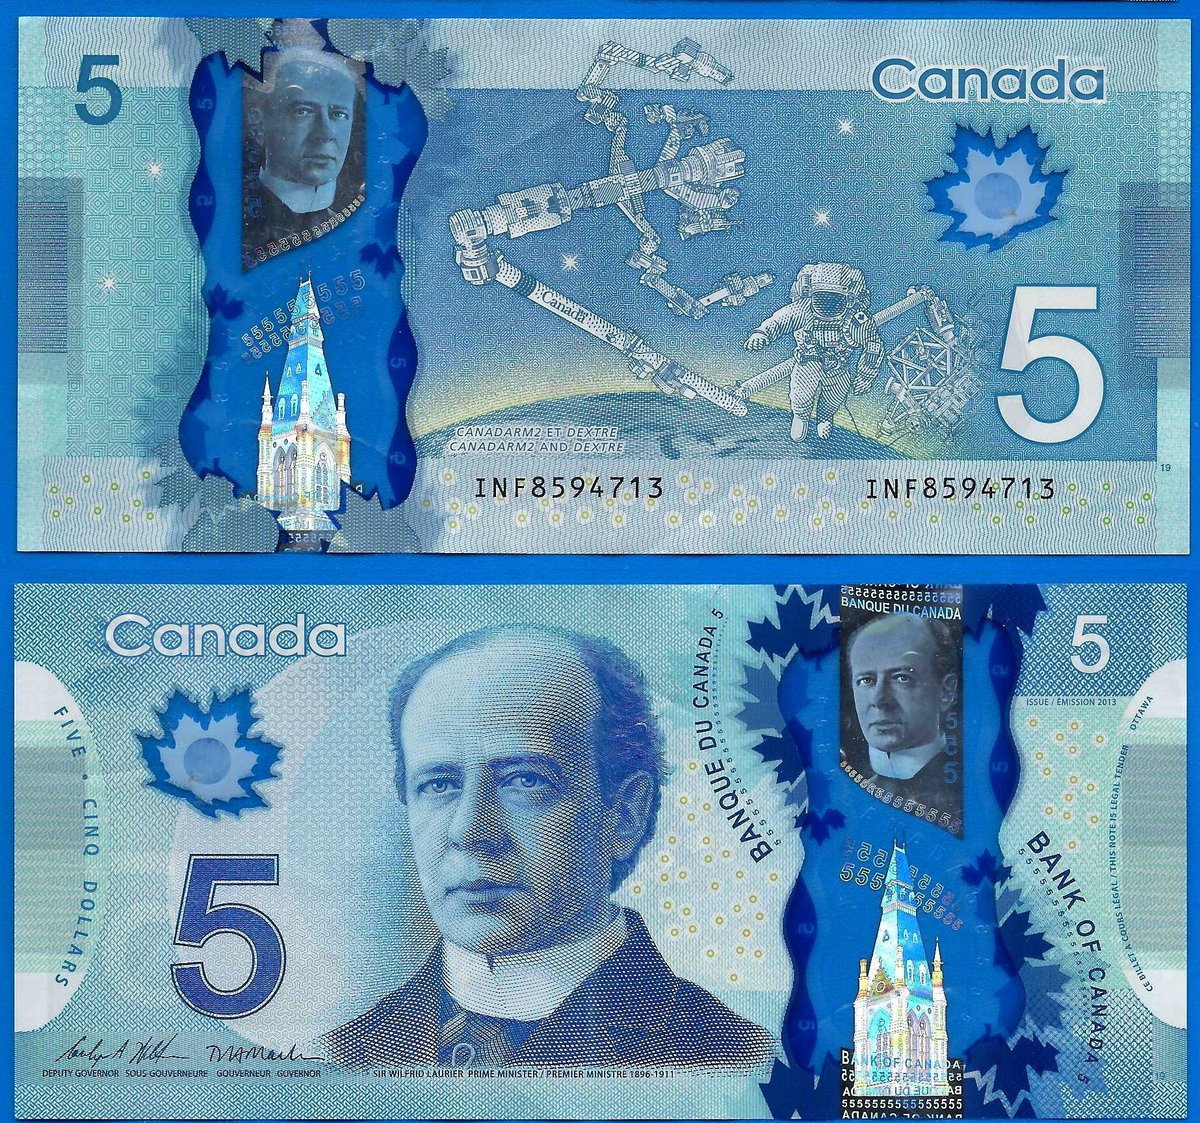 New in my shop Ebay polymer banknote Canada 5 Dollars 2013 It's here: ebay.com/itm/2355153001… #banknote #ebay #dollars #banknotes #cedulas #papermoney #dollar #banknotesoftheworld #banknotescollection #papermoneycollection #currencycollection #canada #polymere #polymer #billet